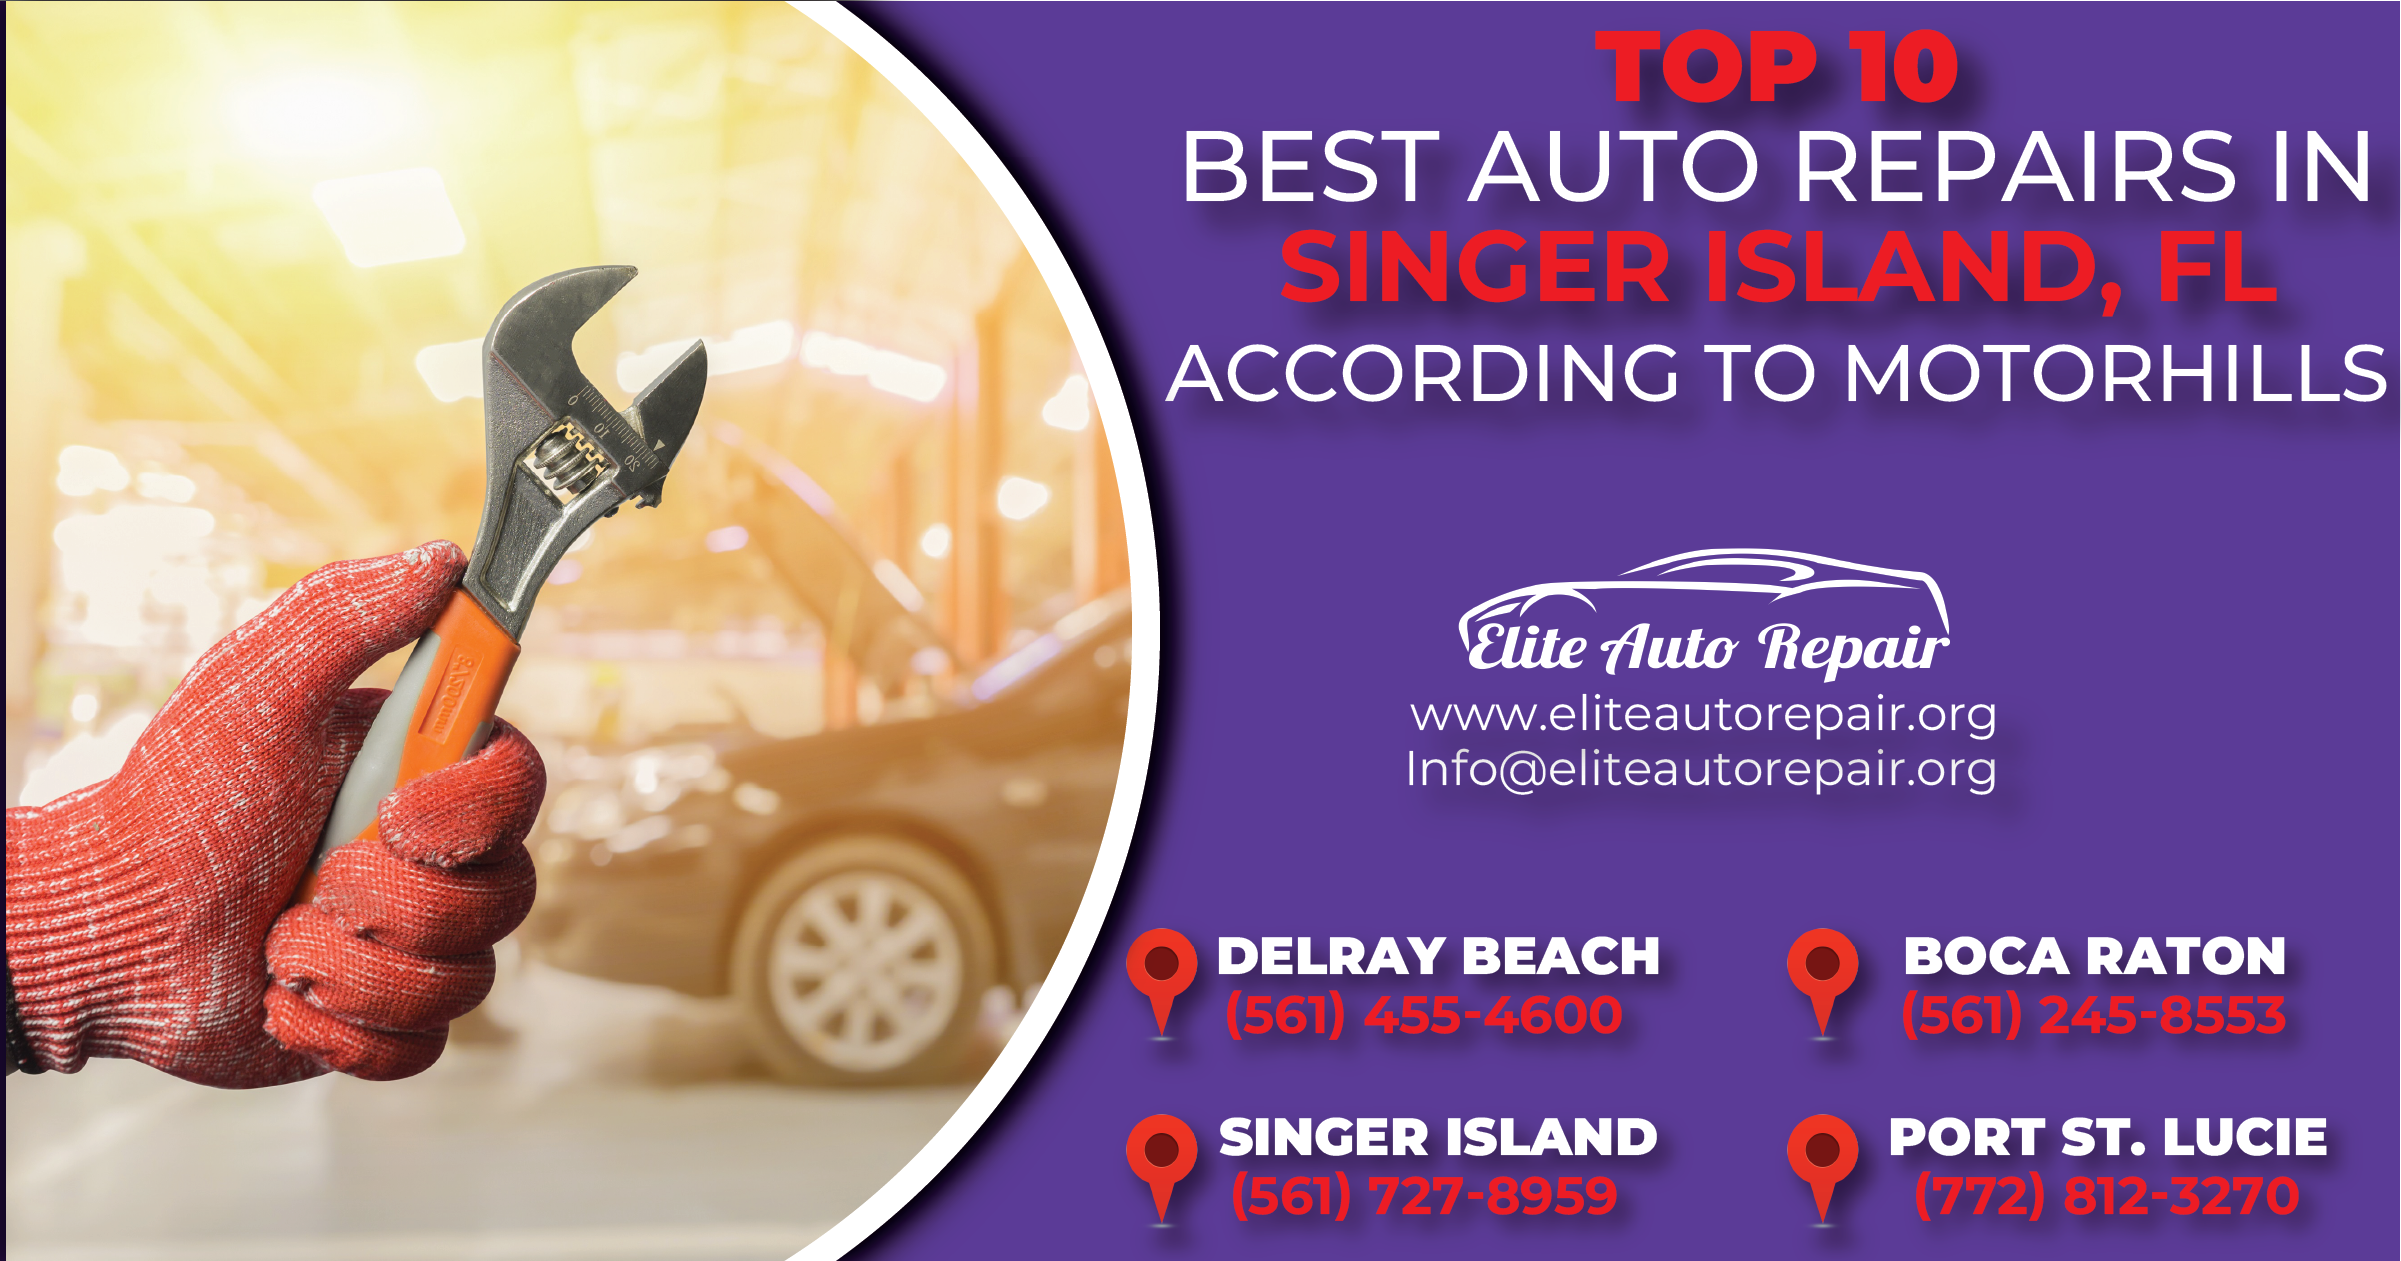 TOP 10 BEST Auto Repairs in Singer Island, Florida – According to Motorhills